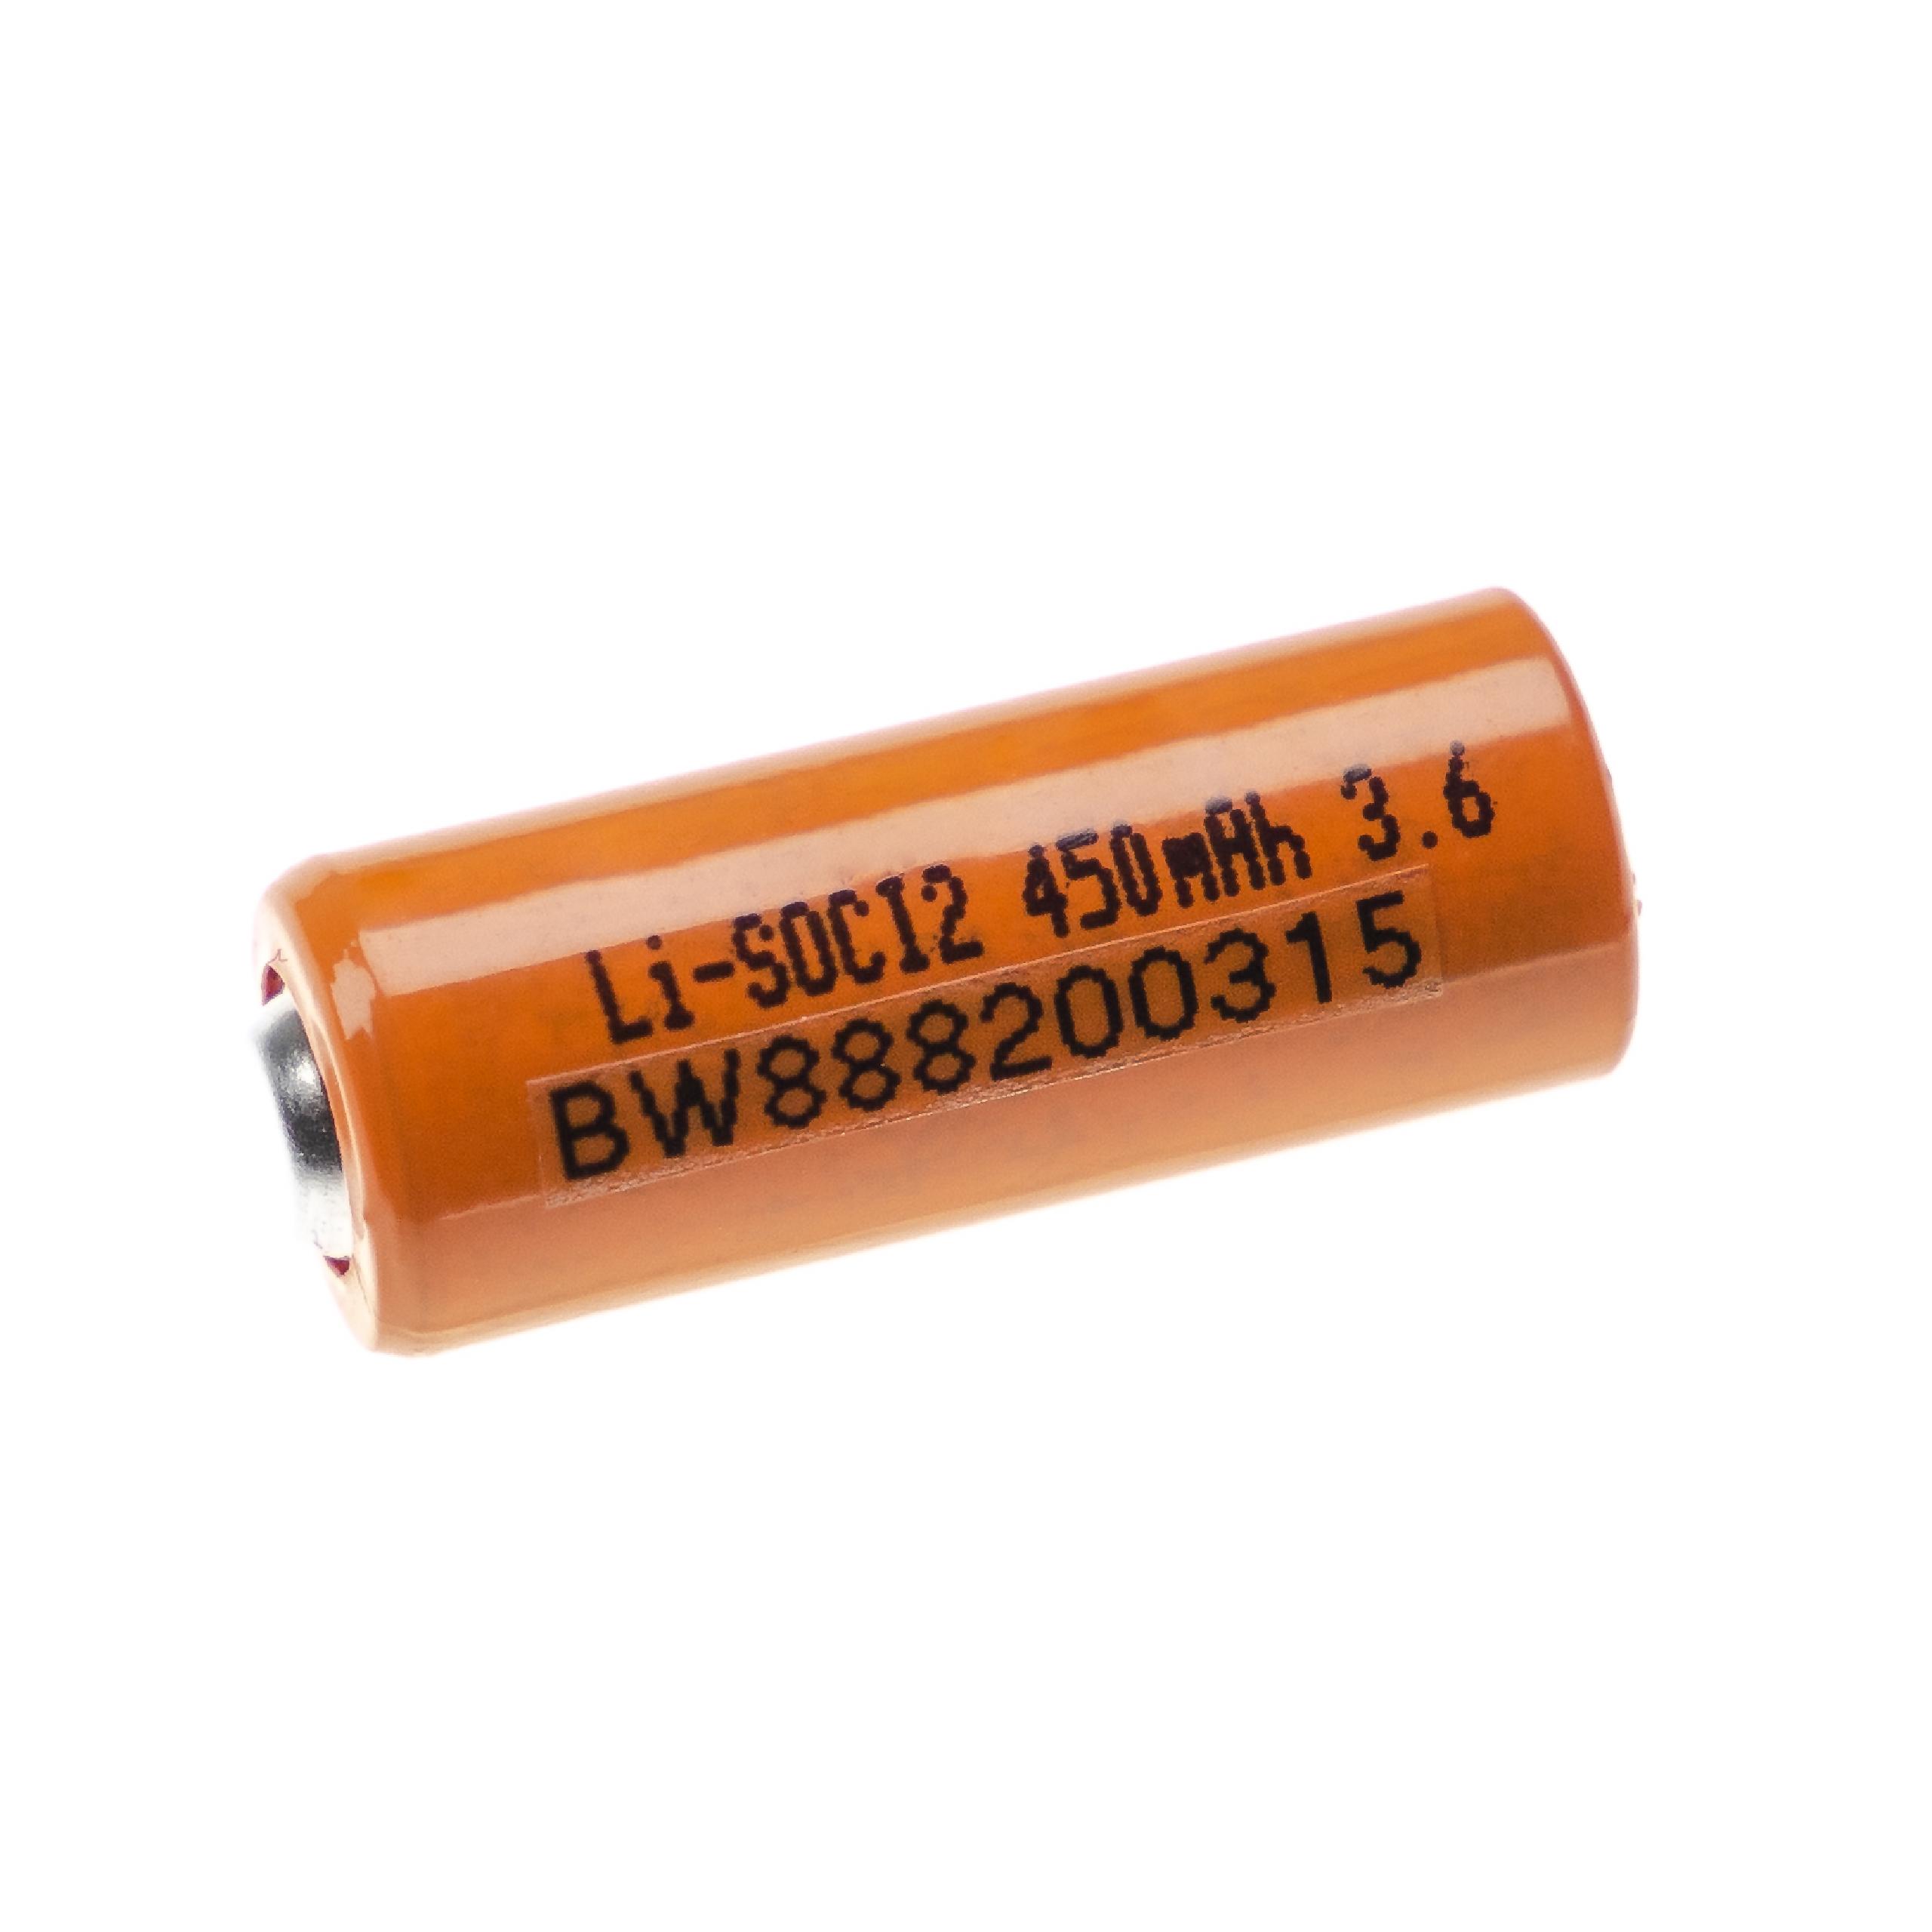 ER10280 Batterie - 450mAh 3,6V Li-SOCl2